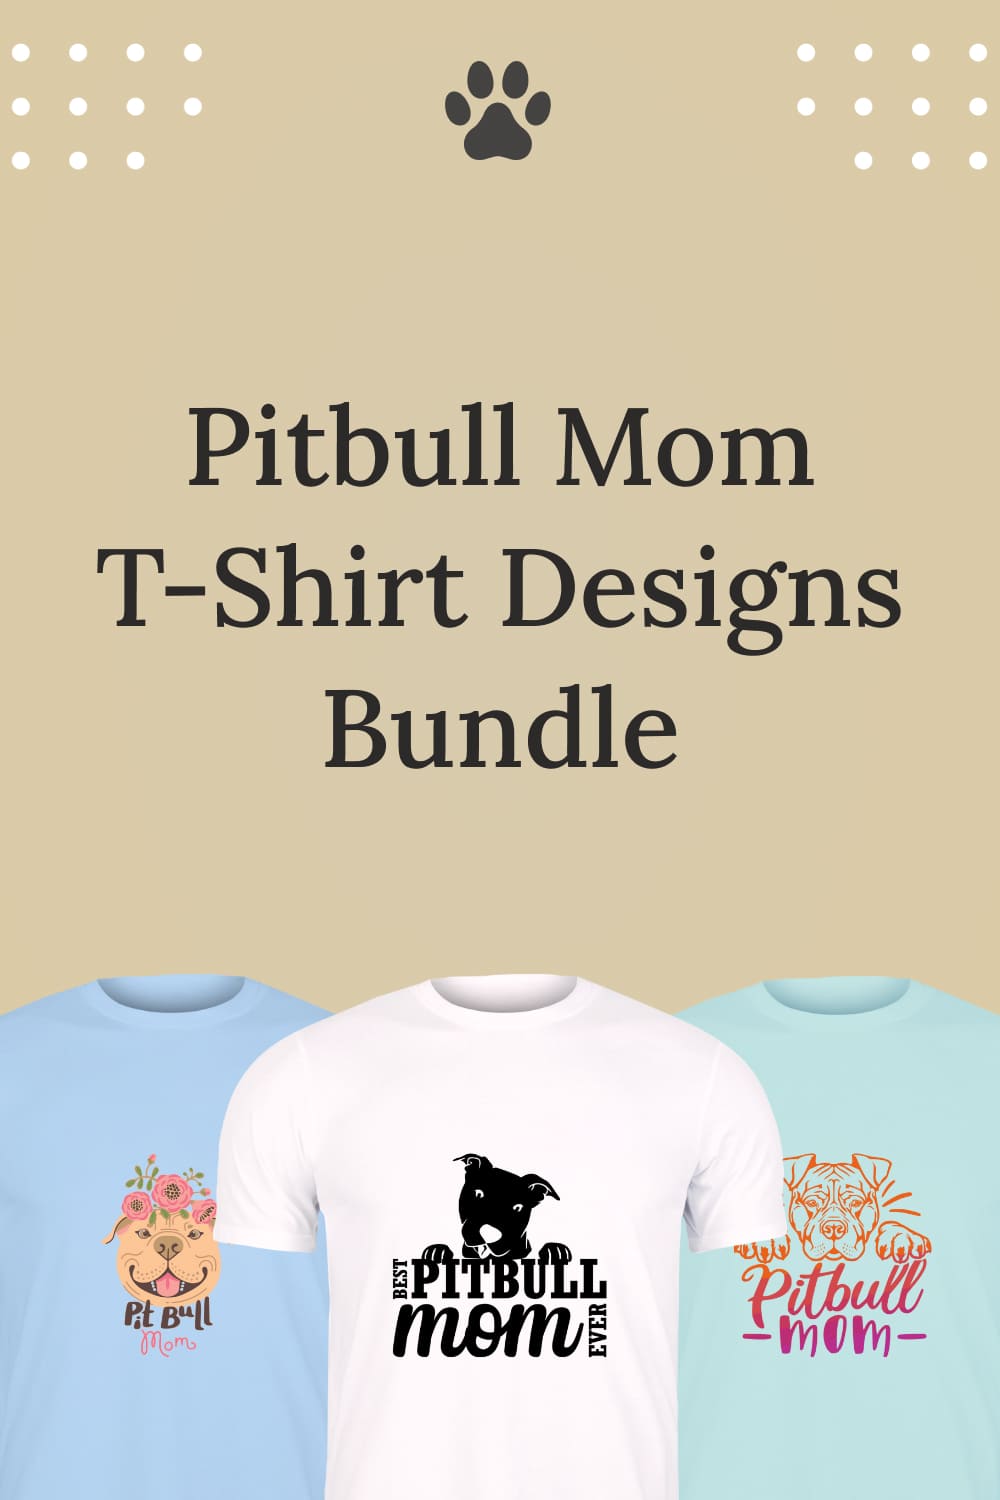 Pitbull Mom Svg T-shirt Designs Bundle - Pinterest.